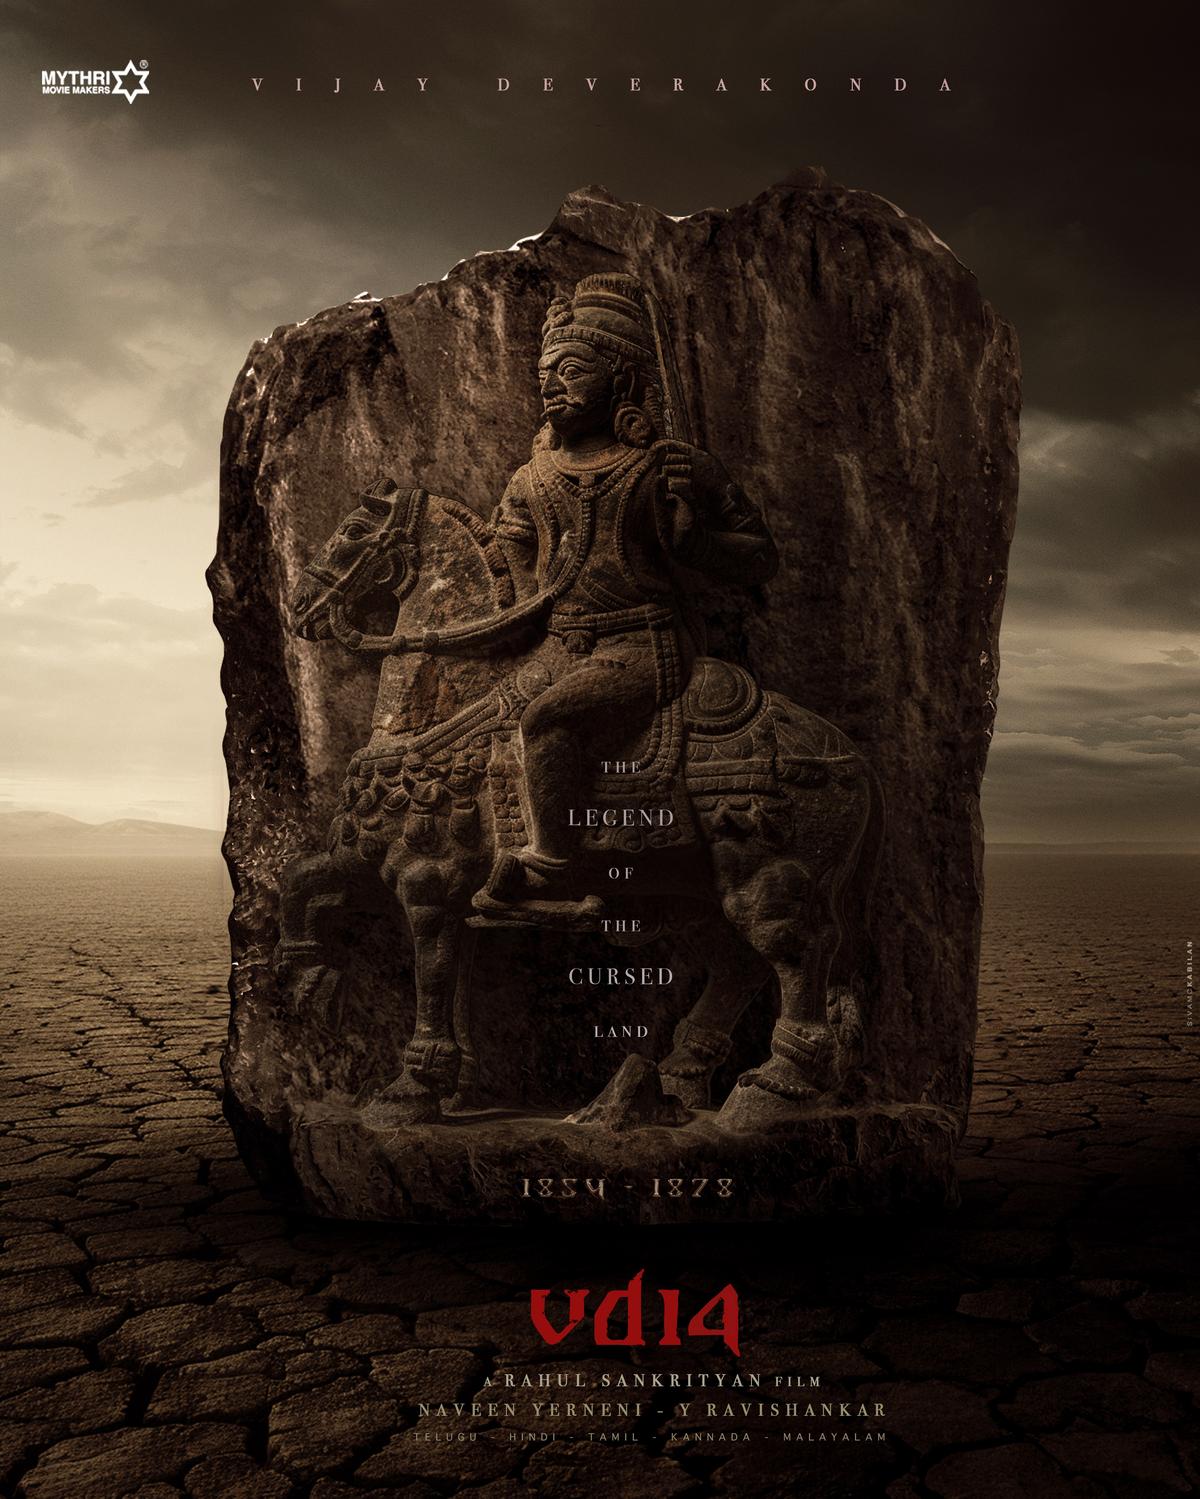 Concept poster of director Rahul Sankrityan’s film starring Vijay Deverakonda